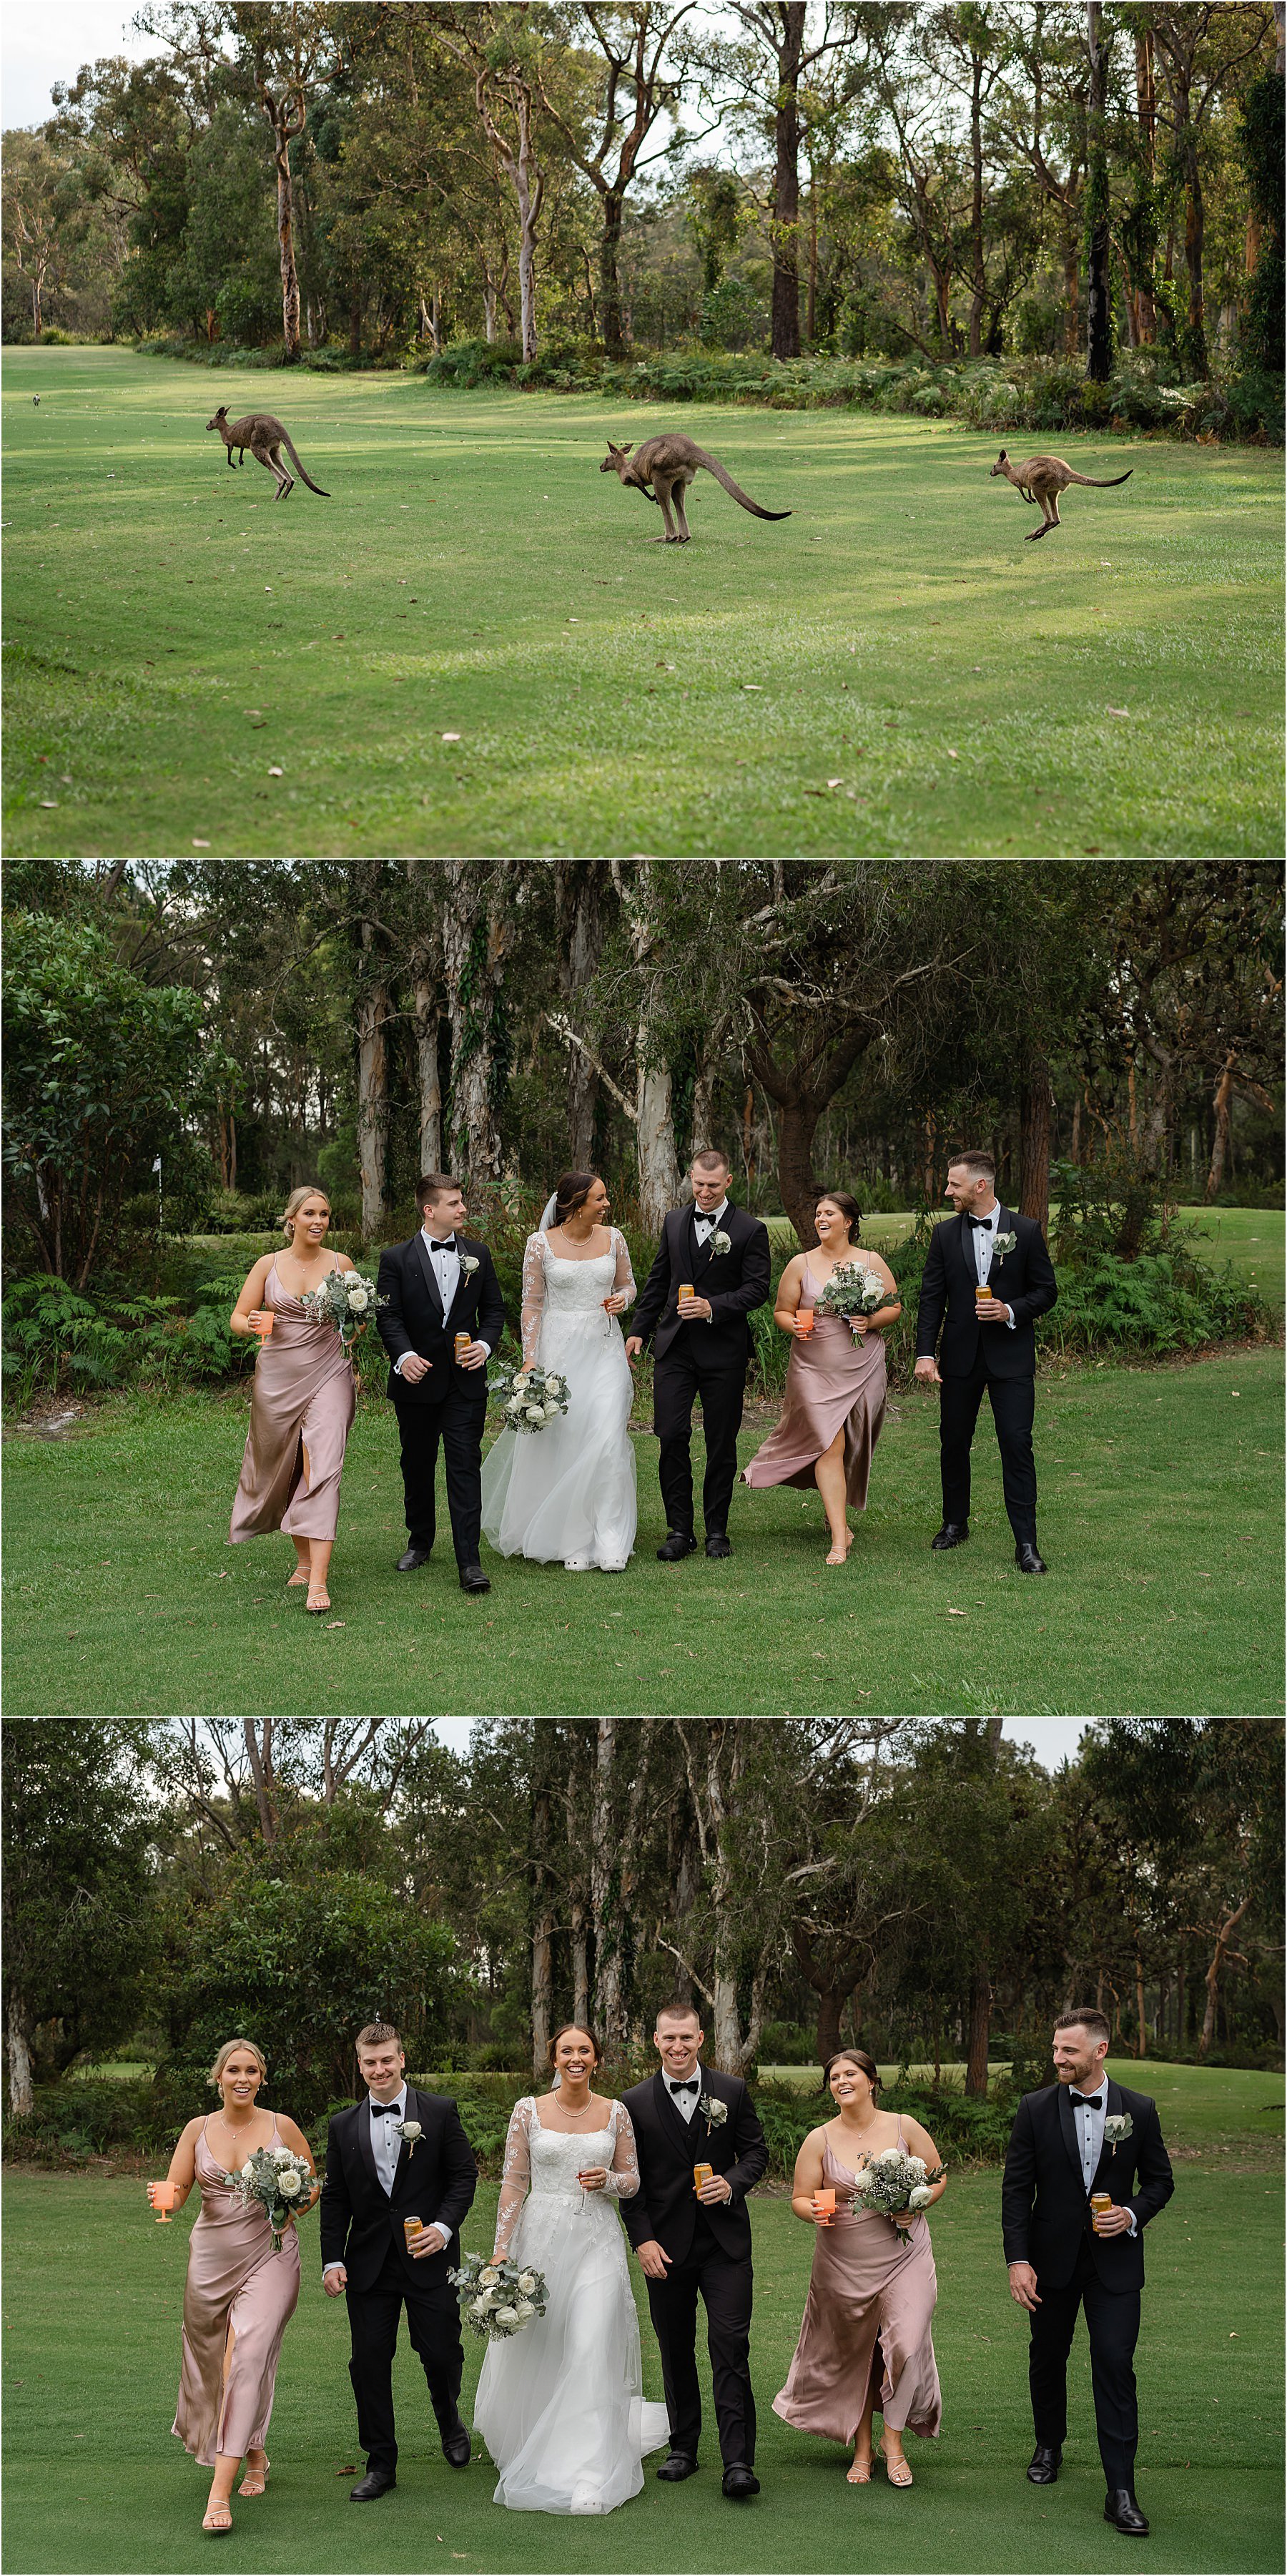 35-micro-wedding-venue-port-stephens-nsw-australia.jpg